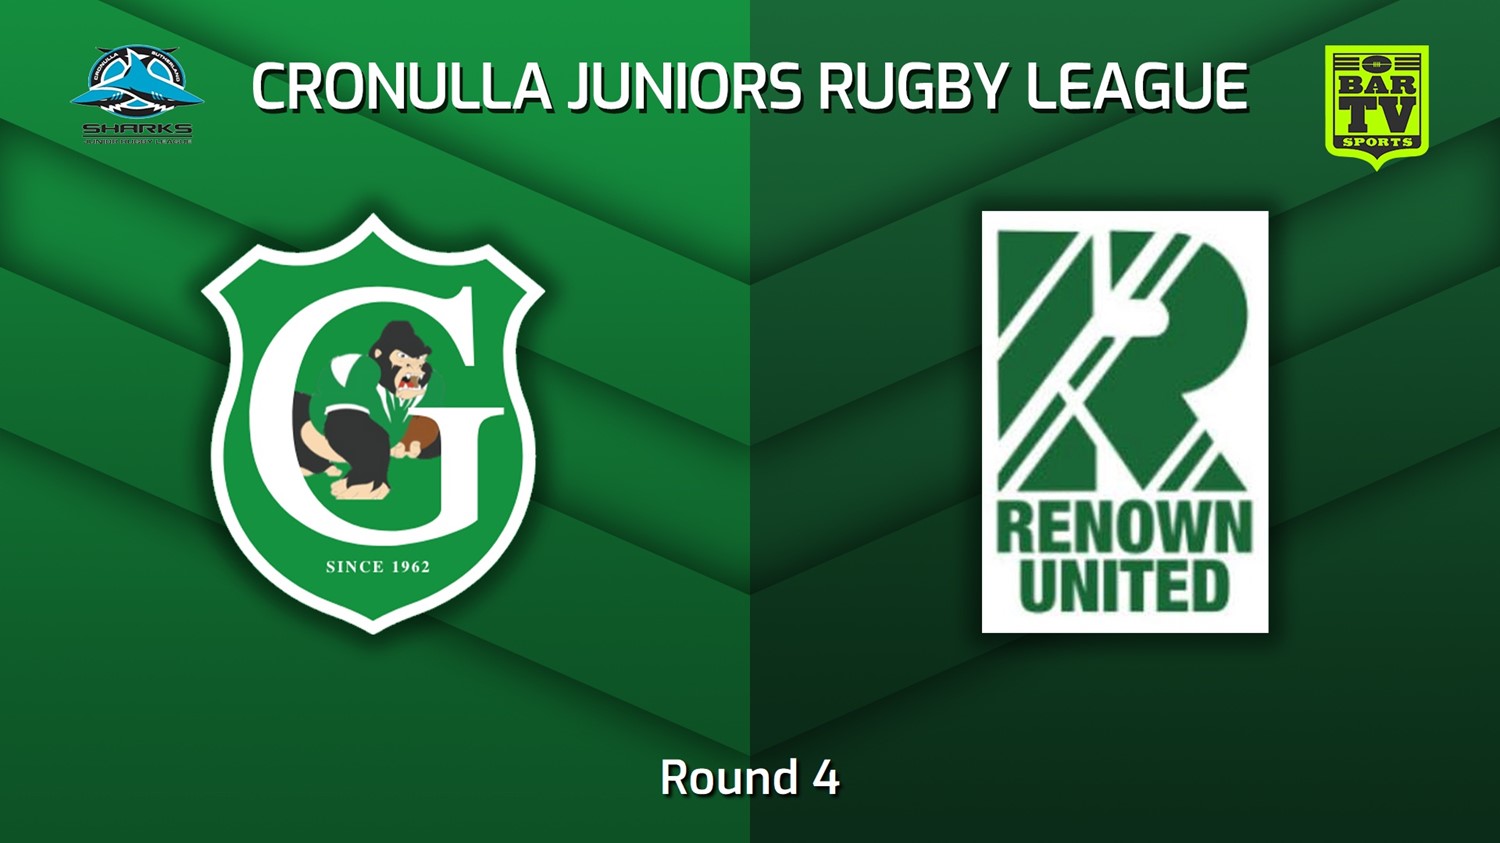 230506-Cronulla Juniors Round 4 - U13 Gold - Gymea Gorillas v Renown United Minigame Slate Image